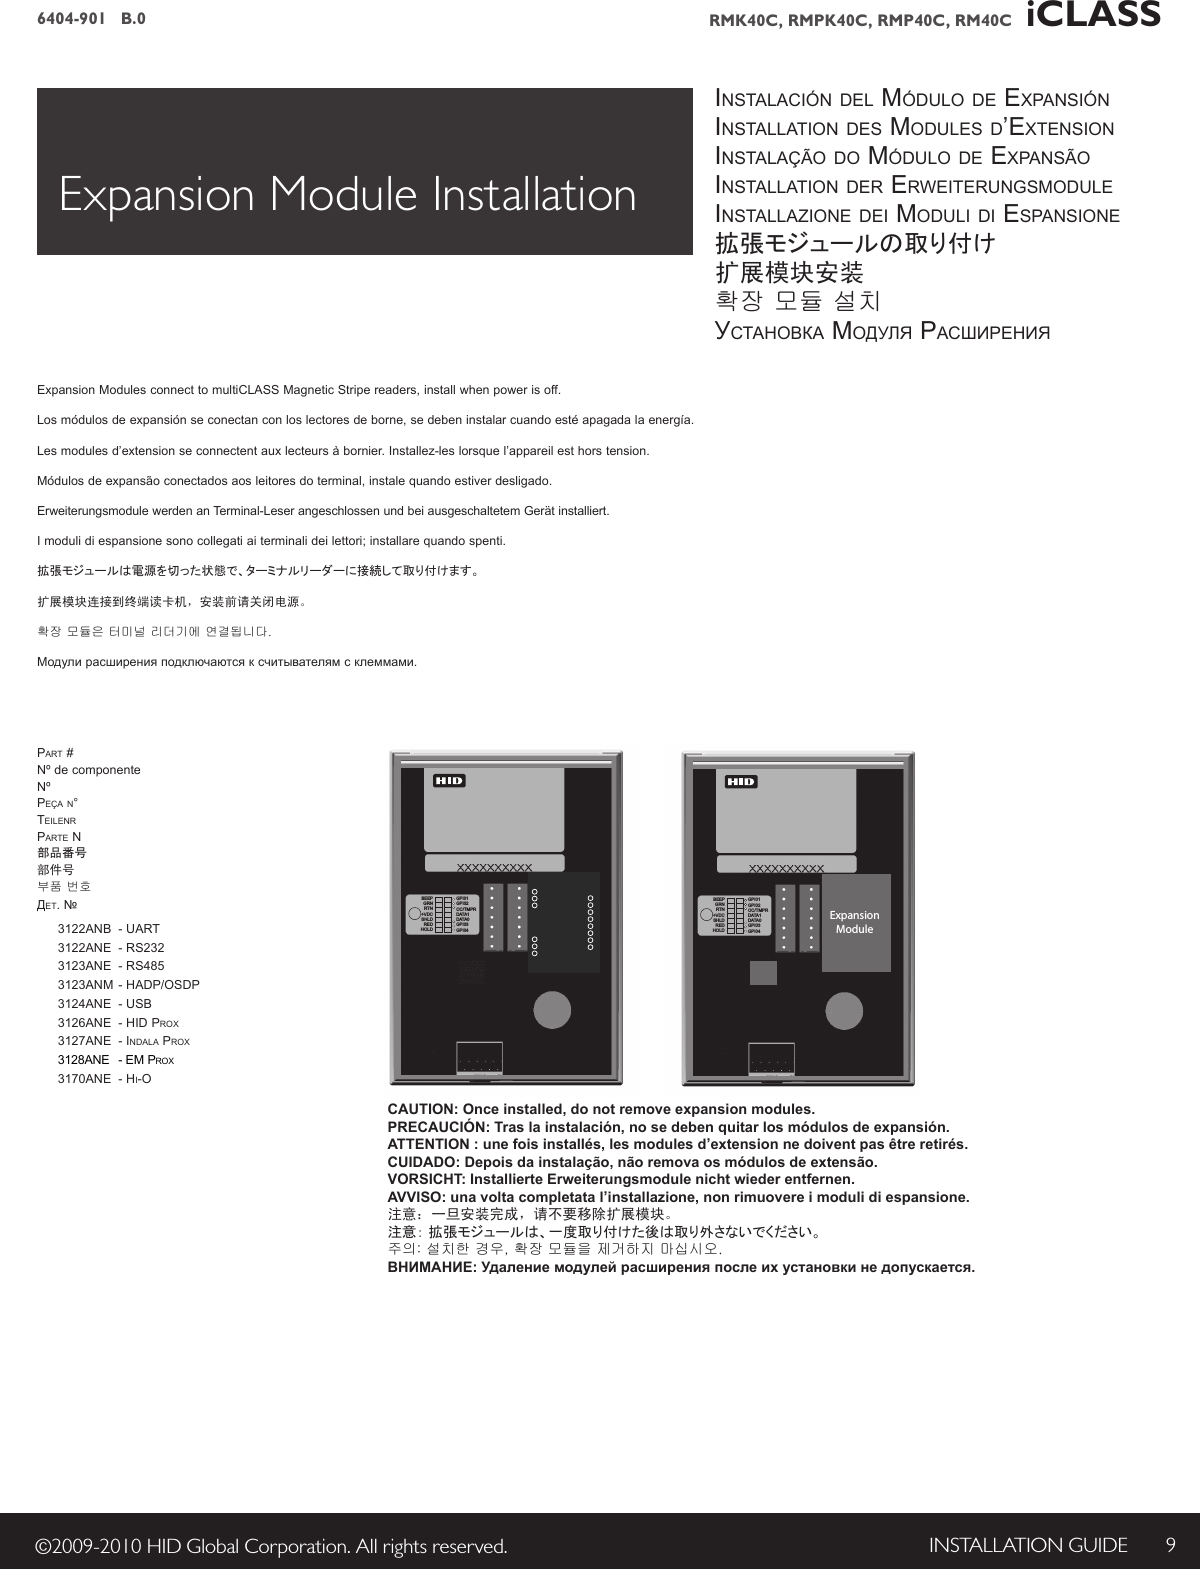 INSTALLATION GUIDE 9©2009-2010 HID Global Corporation. All rights reserved.6404-901   B.0 RMK40C, RMPK40C, RMP40C, RM40C   iCLASS BEEPGRNRTN+VDCSHLDREDHOLDGPI01GPI02OC/TMPRDATA1DATA0GPI03GPI04CAUTION: Once installed, do not remove expansion modules.PRECAUCIÓN: Tras la instalación, no se deben quitar los módulos de expansión.ATTENTION : une fois installés, les modules d’extension ne doivent pas être retirés.CUIDADO: Depois da instalação, não remova os módulos de extensão.VORSICHT: Installierte Erweiterungsmodule nicht wieder entfernen.AVVISO: una volta completata l’installazione, non rimuovere i moduli di espansione.注意：一旦安装完成，请不要移除扩展模块。注意： 拡張モジュールは、一度取り付けた後は取り外さないでください。주의: 설치한 경우, 확장 모듈을 제거하지 마십시오.ВНИМАНИЕ: Удаление модулей расширения после их установки не допускается.Expansion Module InstallationBEEPGRNRTN+VDCSHLDREDHOLDGPI01GPI02OC/TMPRDATA1DATA0GPI03GPI04ExpansionModulepart # Nºdecomponente nºpeça n° teilenrparte n部品番号部件号부품 번호ДЕТ. №  3122anb  - uart  3122ane  - rs232  3123ane  - rs485  3123anm - hadp/osdp  3124ane  - usb  3126ane  - hid prox  3127ane  - indala prox 3128ANE -em prox  3170ane  - hi-oinstalación del módulo de expansióninstallation des modules d’extensioninstalação do módulo de expansãoinstallation der erweiterungsmoduleinstallazione dei moduli di espansione拡張モジュールの取り付け扩展模块安装확장 모듈 설치УсТАнОВКА mОДУЛЯ pАсшИрЕнИЯExpansionModulesconnecttomultiCLASSMagneticStripereaders,installwhenpowerisoff.Losmódulosdeexpansiónseconectanconloslectoresdeborne,sedebeninstalarcuandoestéapagadalaenergía.Lesmodulesd’extensionseconnectentauxlecteursàbornier.Installez-leslorsquel’appareilesthorstension.Módulosdeexpansãoconectadosaosleitoresdoterminal,instalequandoestiverdesligado.ErweiterungsmodulewerdenanTerminal-LeserangeschlossenundbeiausgeschaltetemGerätinstalliert.Imodulidiespansionesonocollegatiaiterminalideilettori;installarequandospenti.拡張モジュールは電源を切った状態で、ターミナルリーダーに接続して取り付けます。扩展模块连接到终端读卡机，安装前请关闭电源。확장 모듈은 터미널 리더기에 연결됩니다. Модулирасширенияподключаютсяксчитывателямсклеммами.